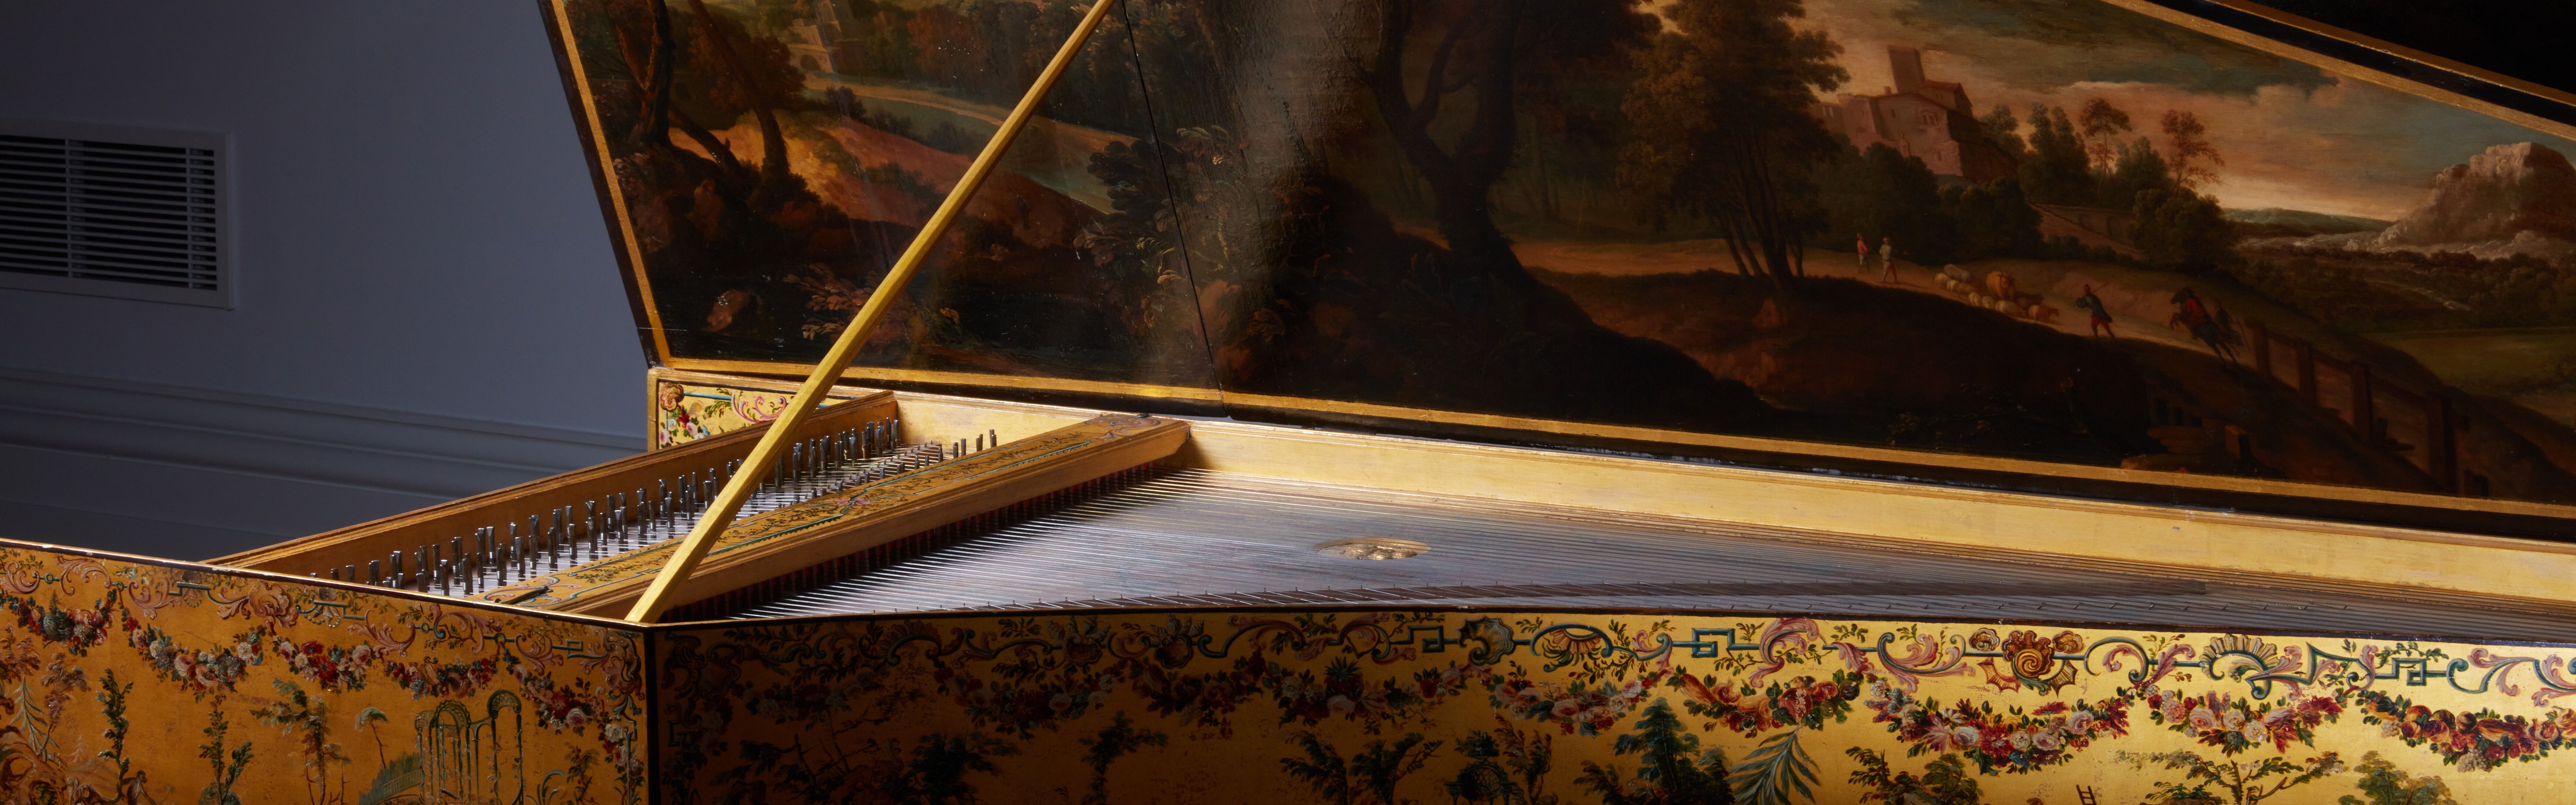 The Ruckers harpsichord